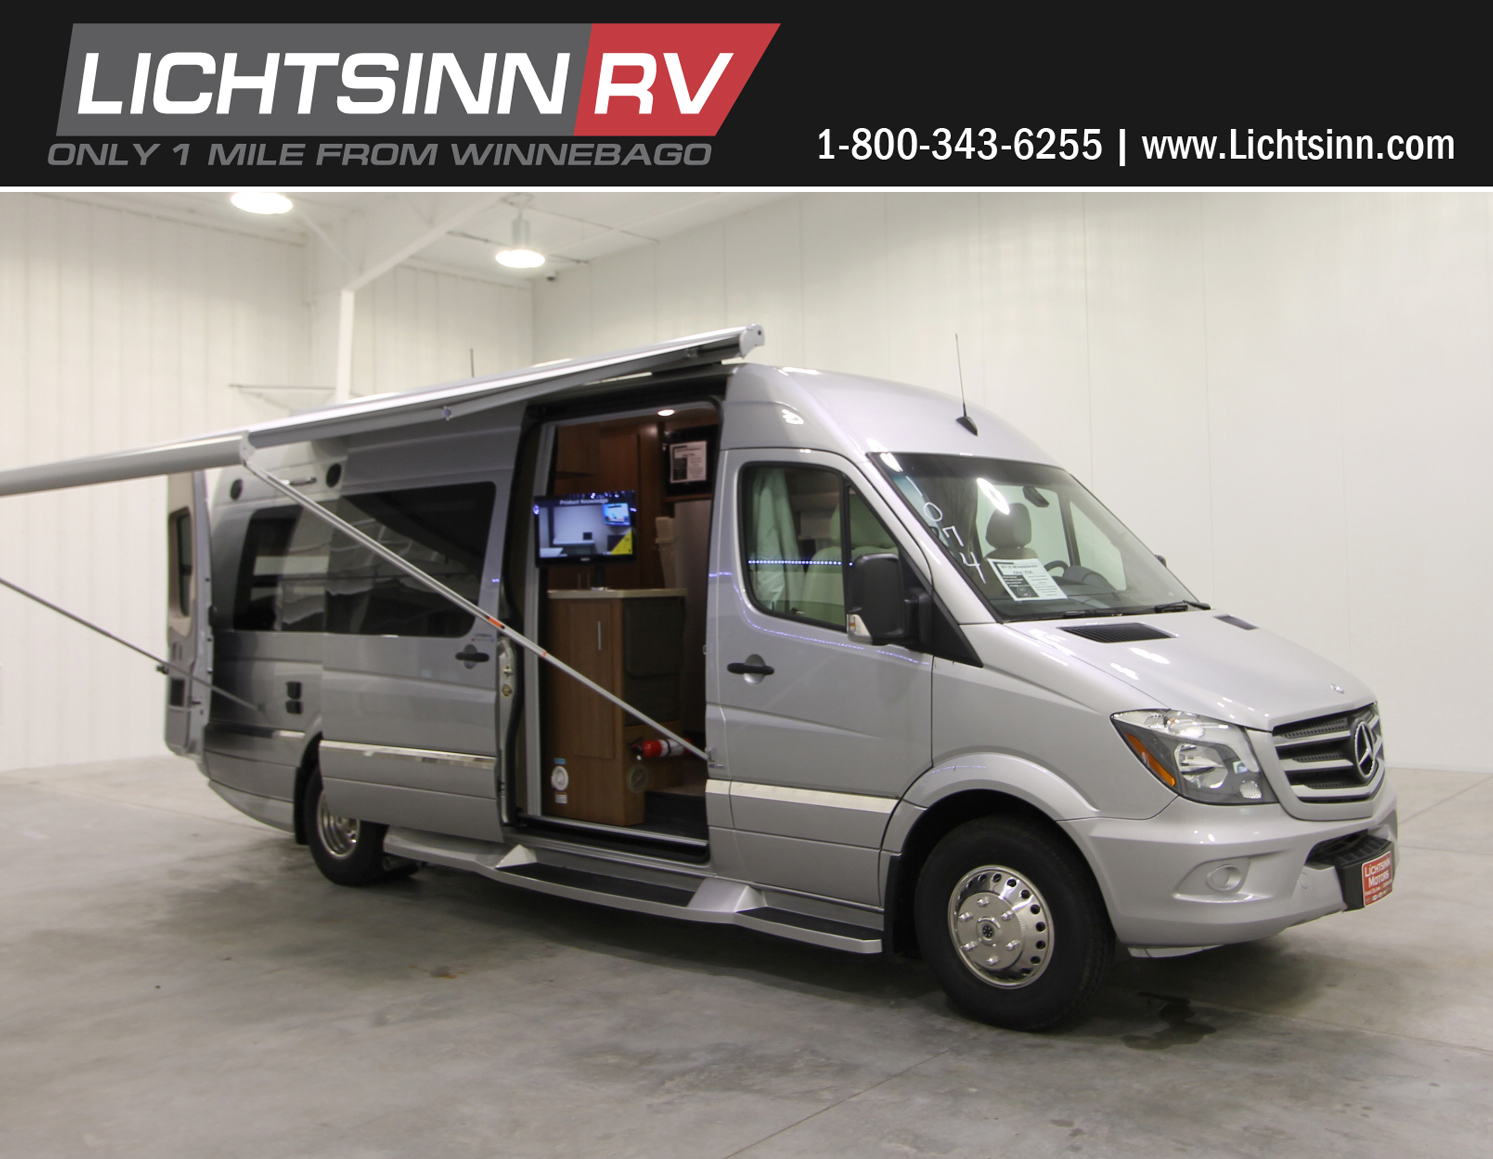 Lichtsinn RV and Winnebago Touring Coach Leads the Way in Innovation,  Market Share - Lichtsinn RV Blog